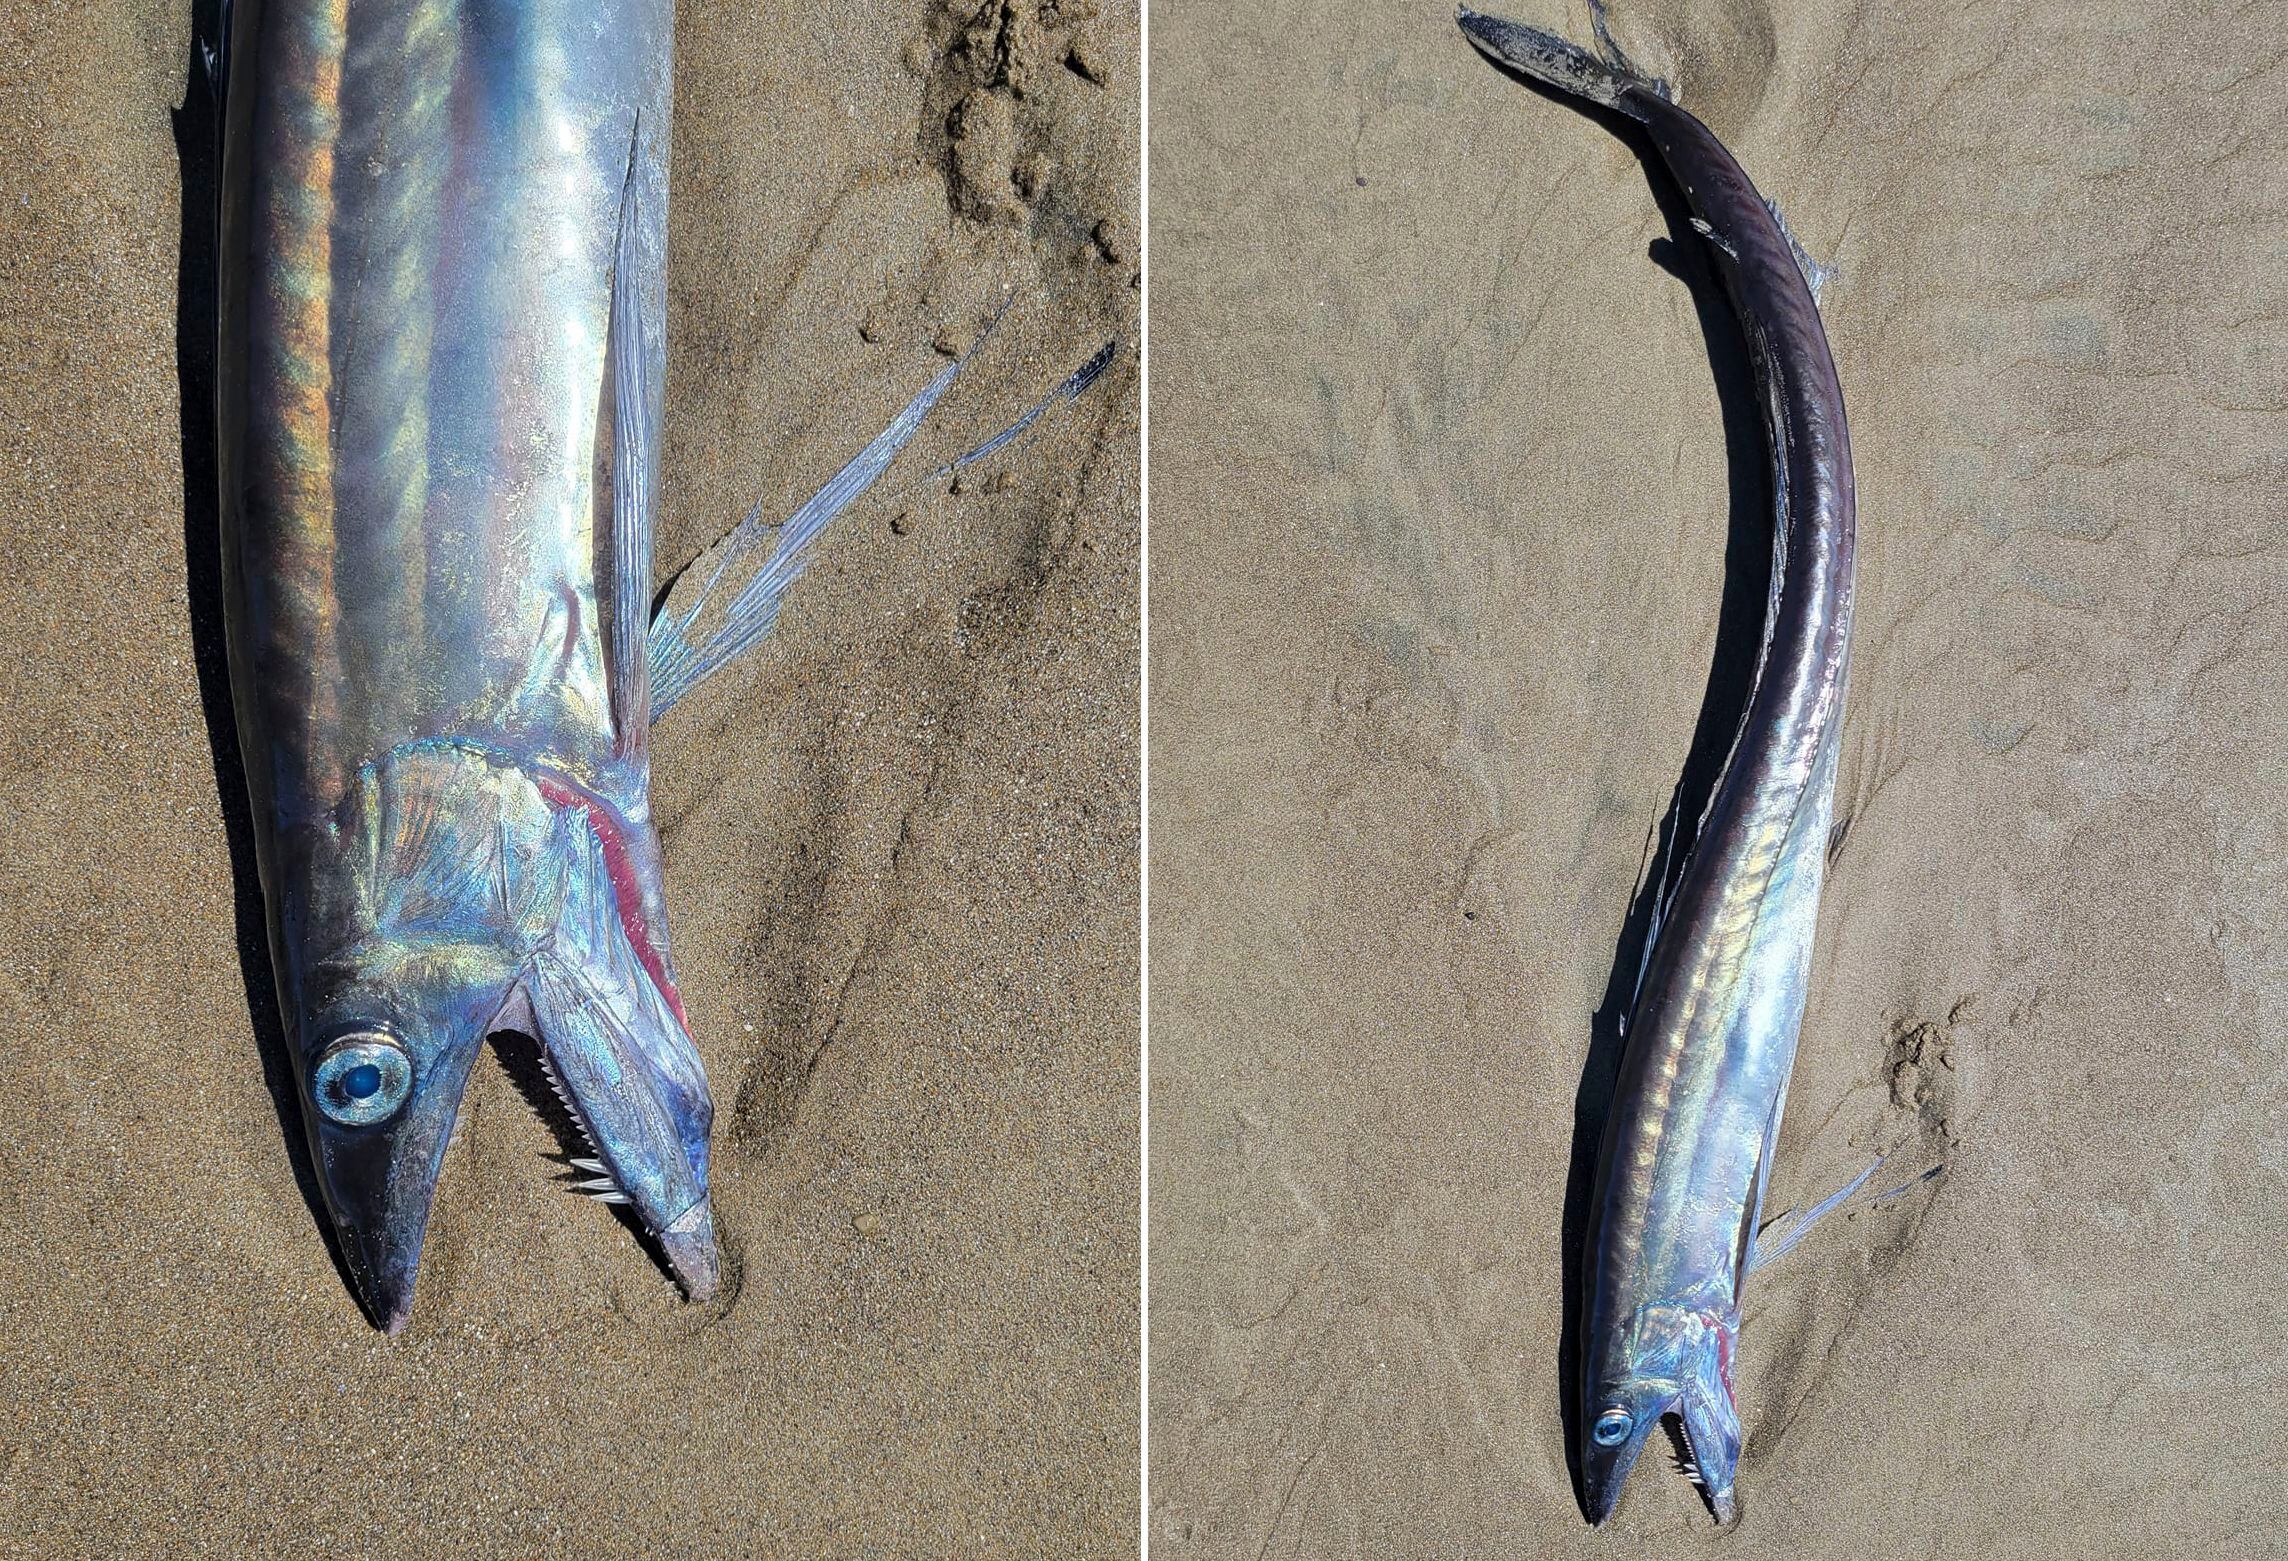 Freaky-looking' fanged deep sea fish found on Oregon beaches - NZ Herald